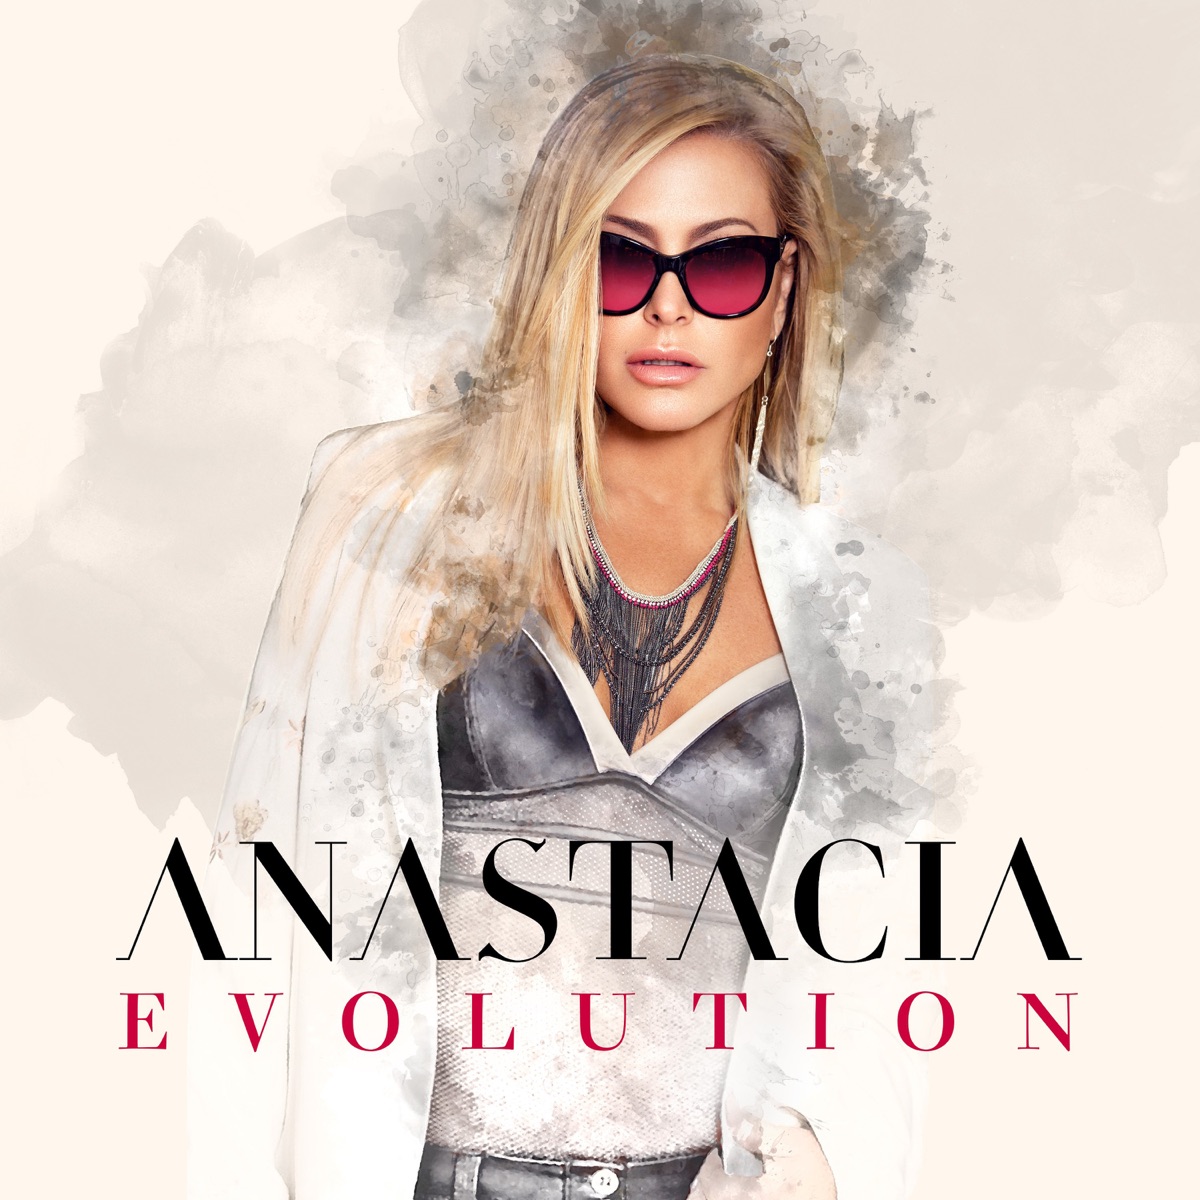 Anastacia by Anastacia on Apple Music photo